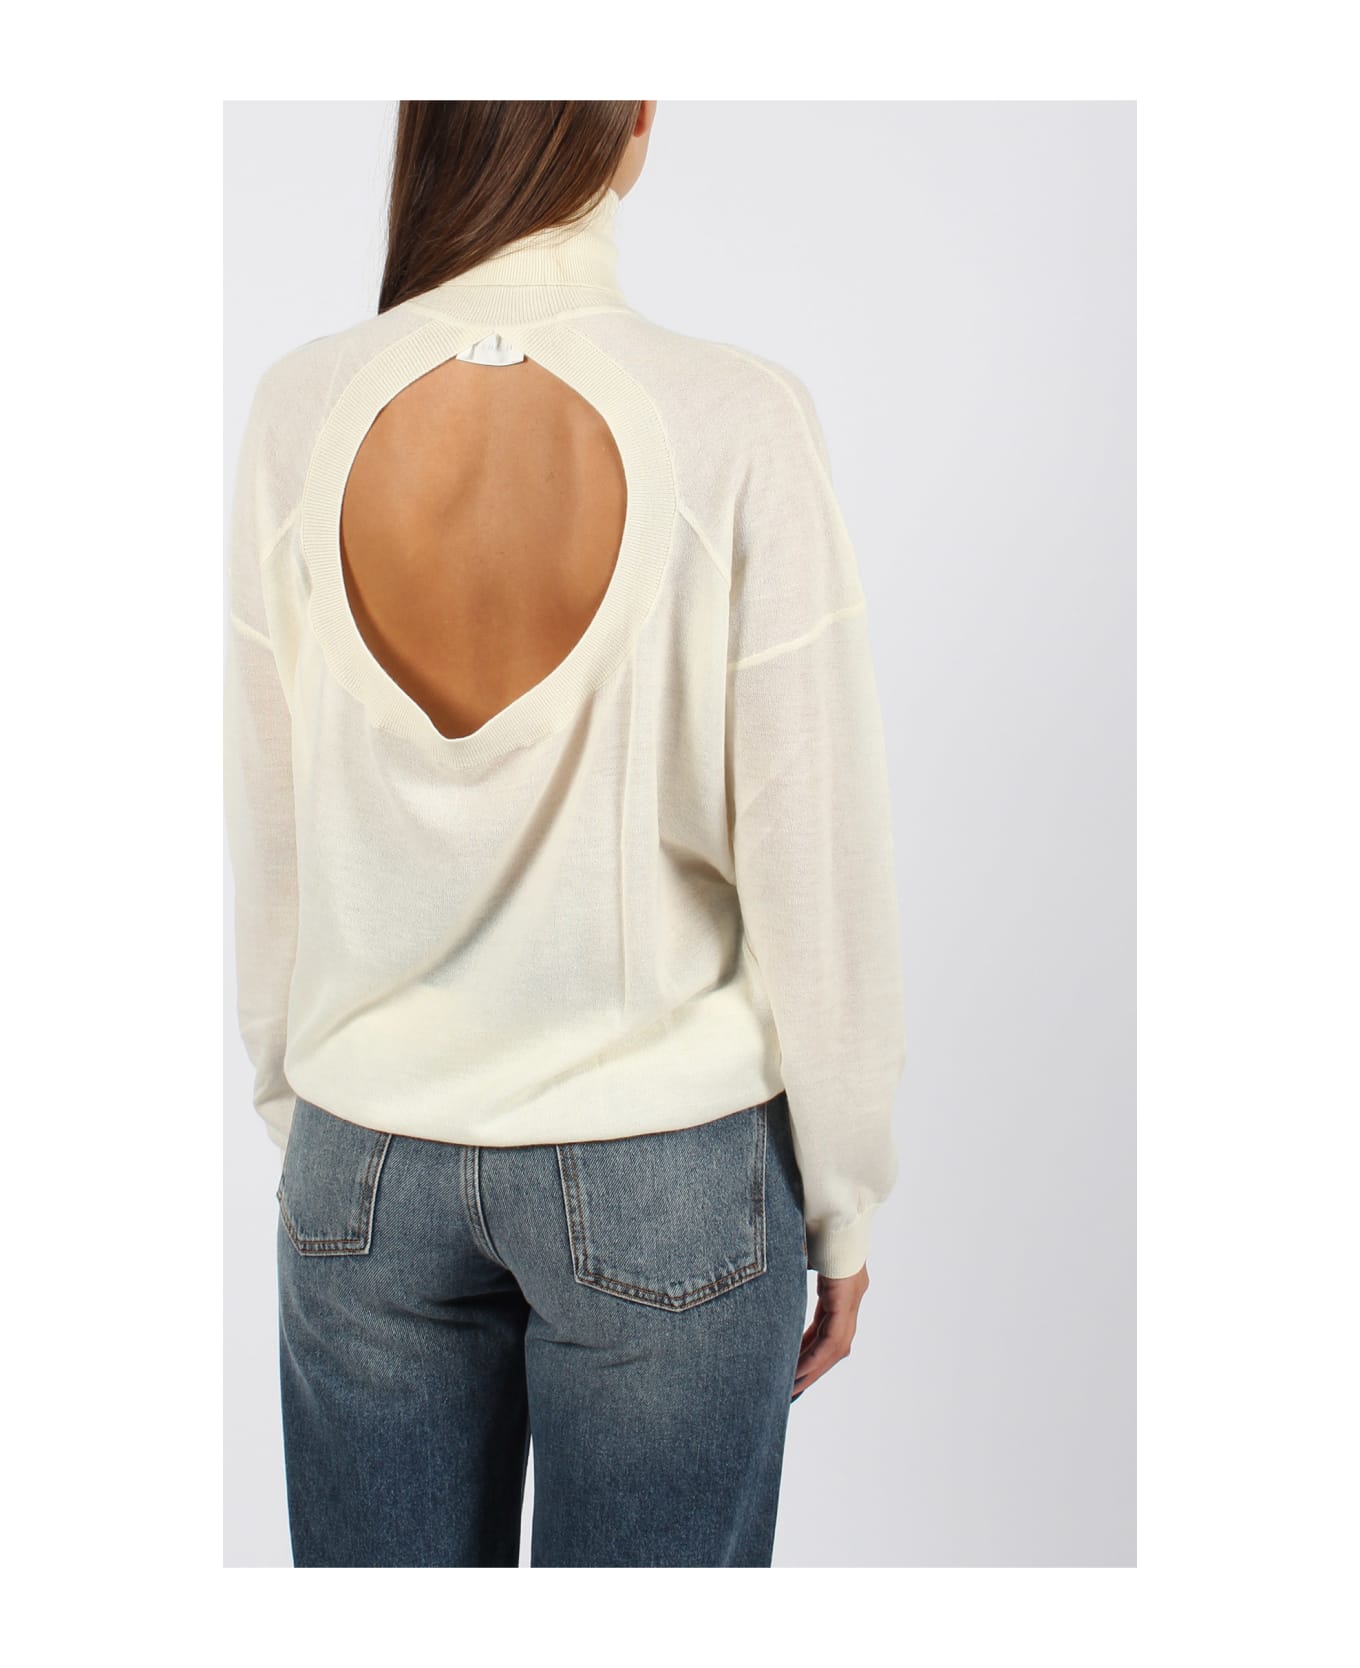 Parosh Well Cashmere Sweater - White